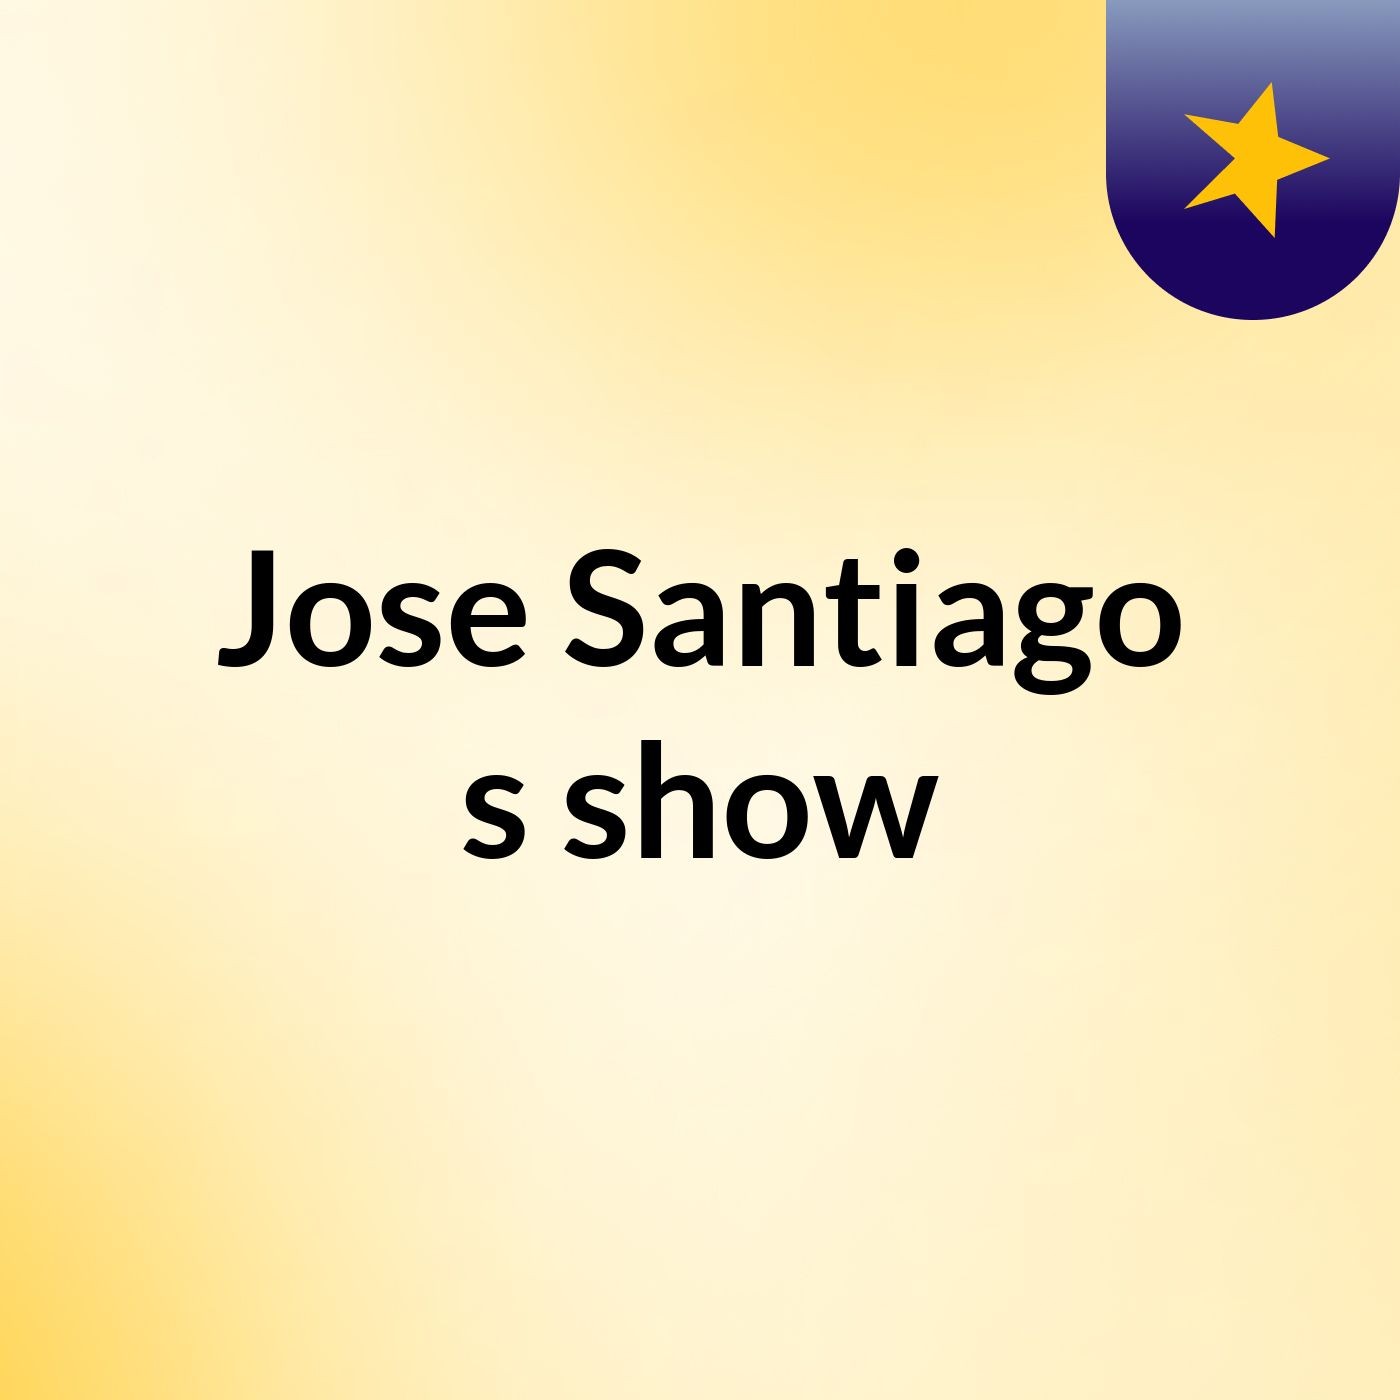 Jose Santiago's show